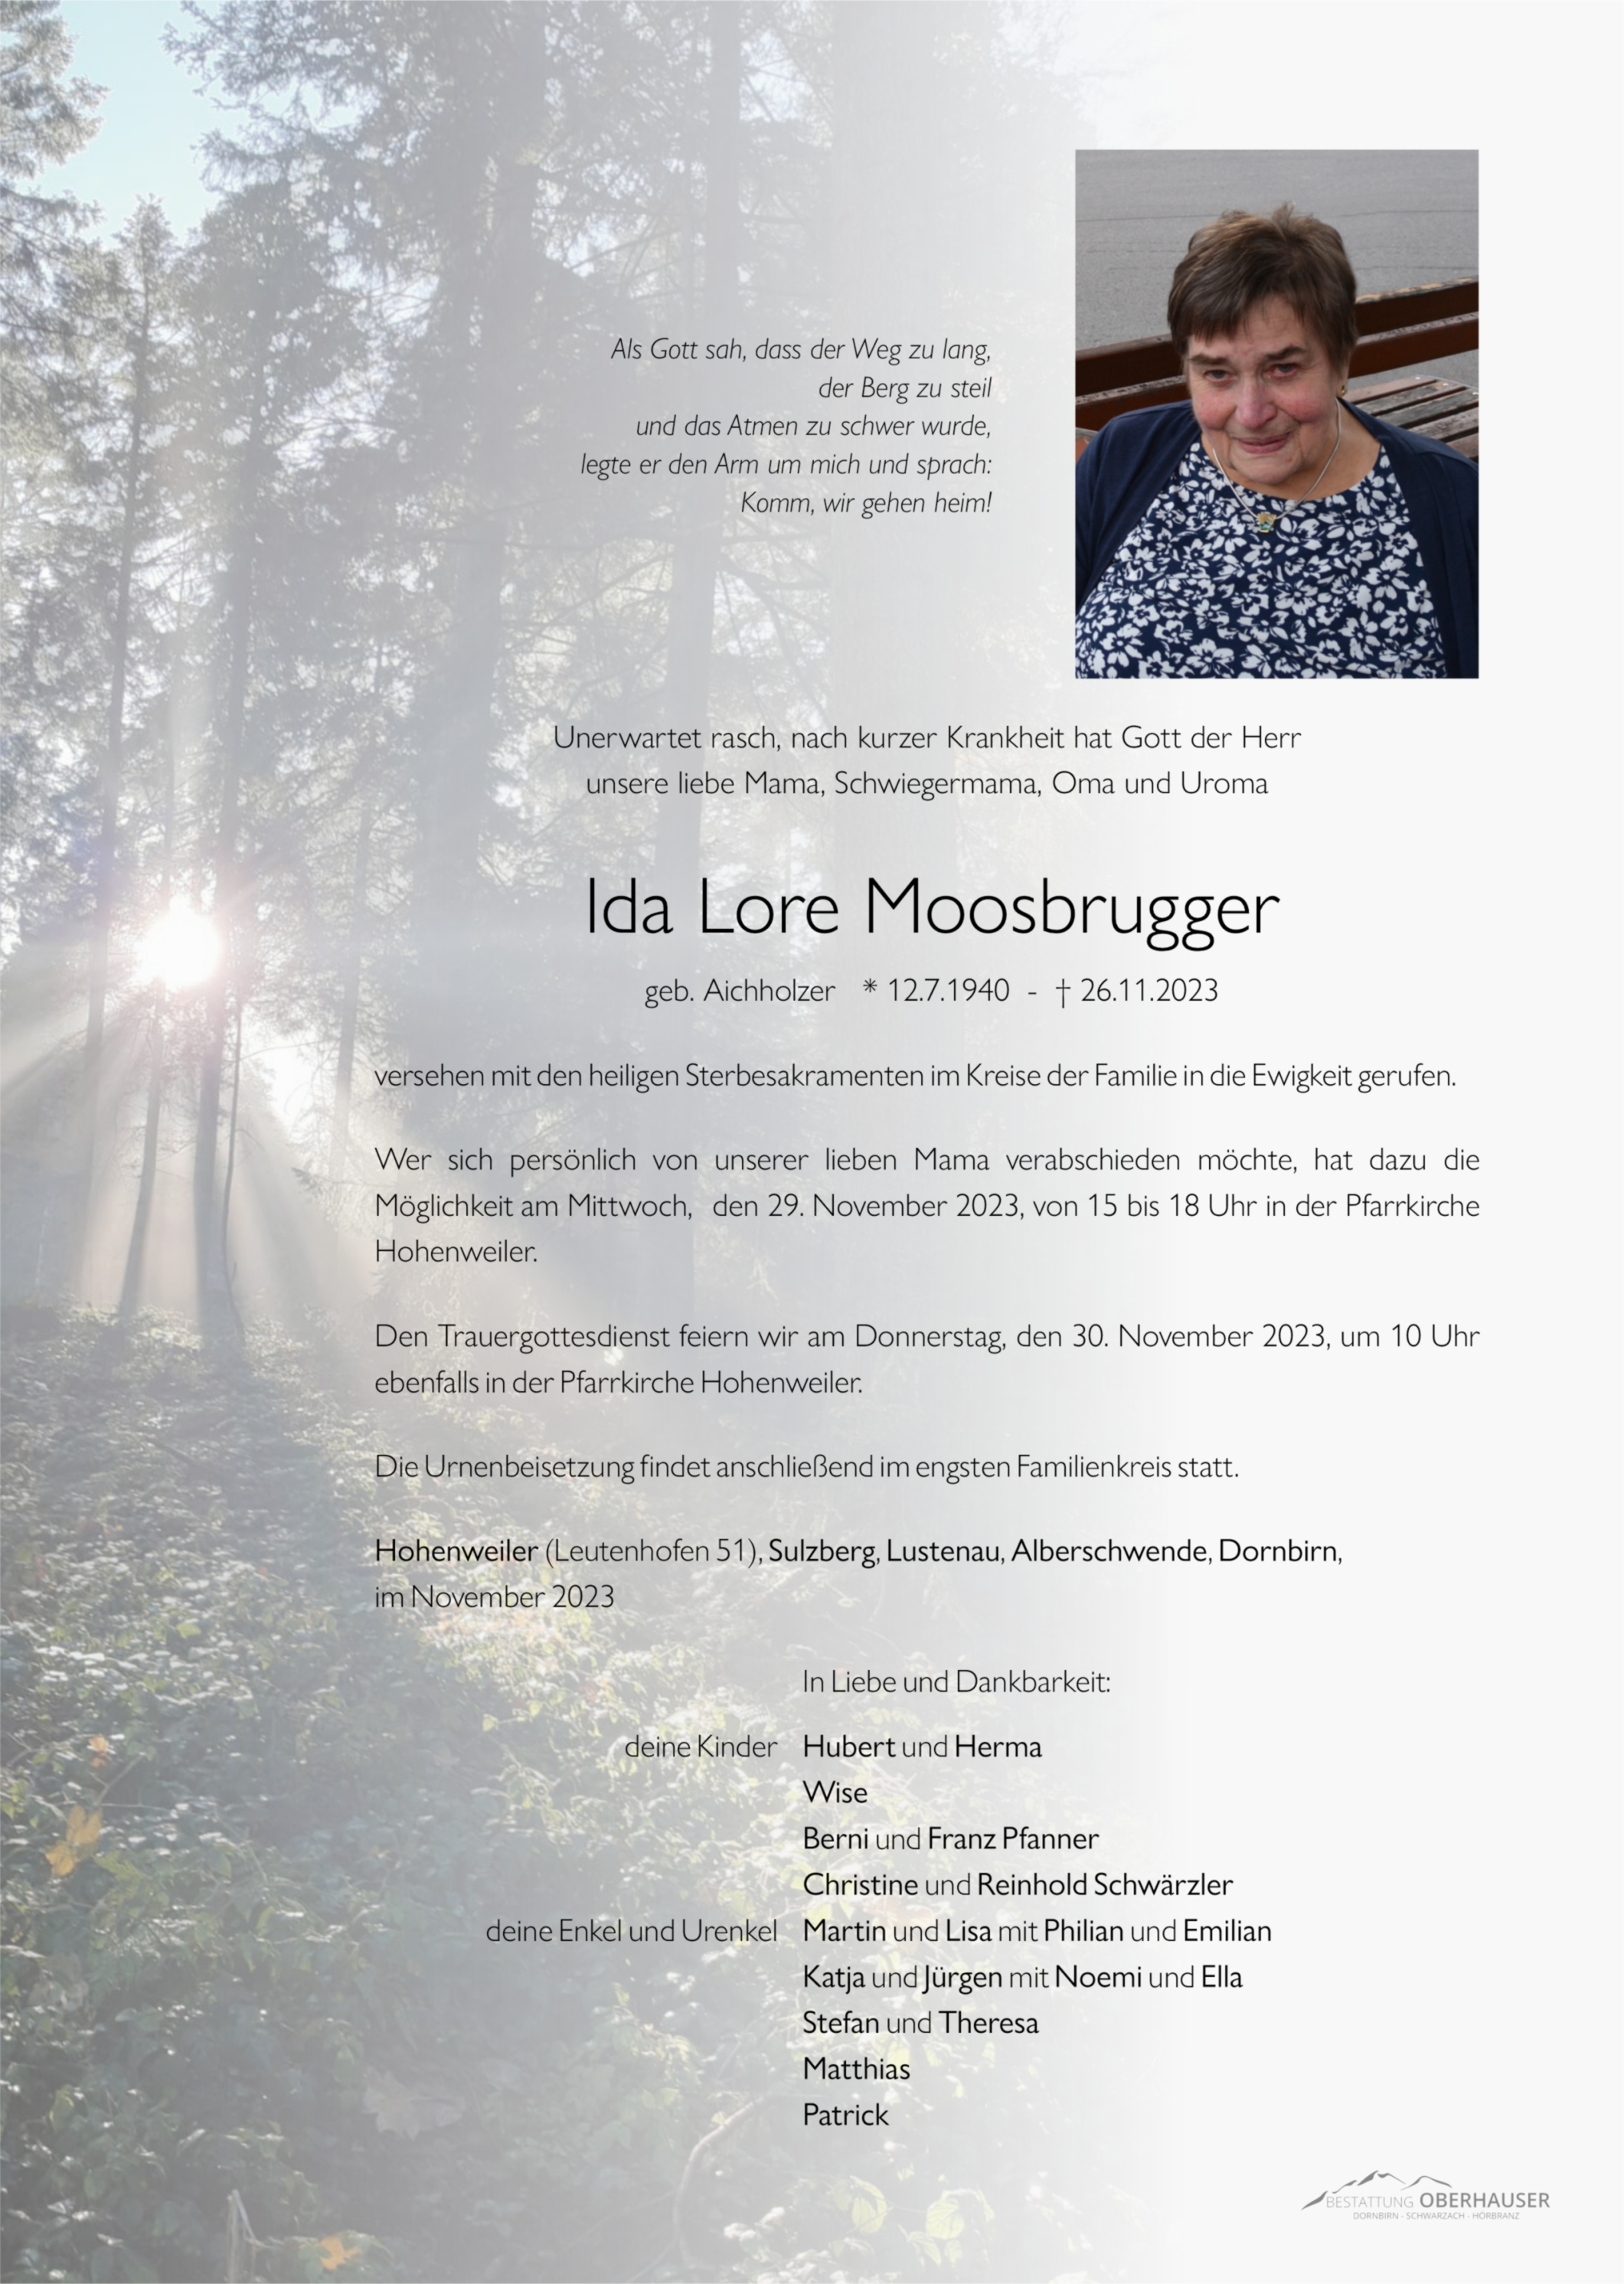 Ida Lore Moosbrugger